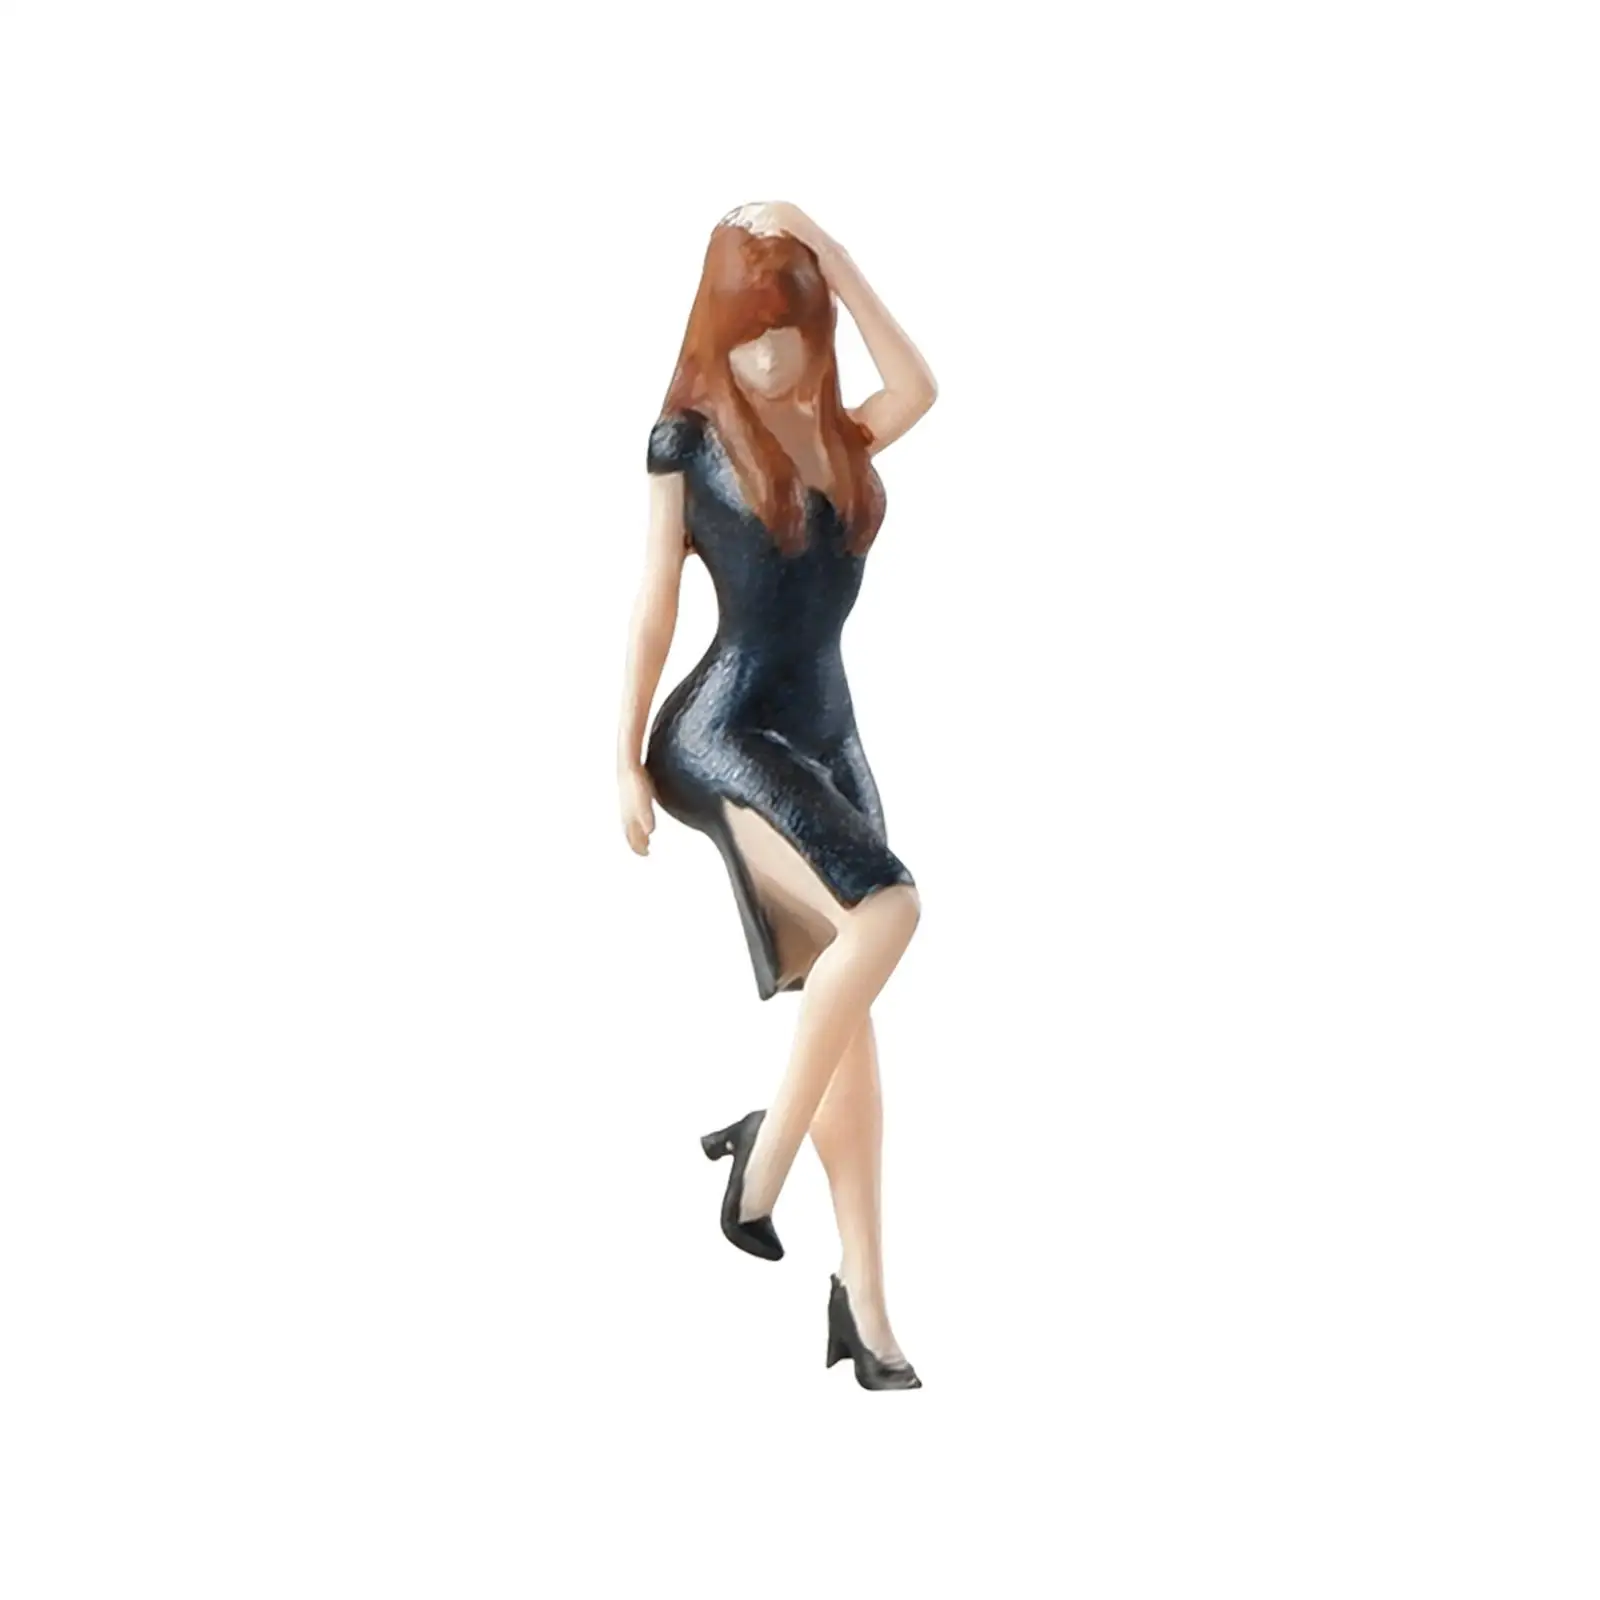 1/64 Scale Model Figures Photography Props 1/64 Model Women Figures for Desktop Ornament DIY Scene Decor Dollhouse Decor